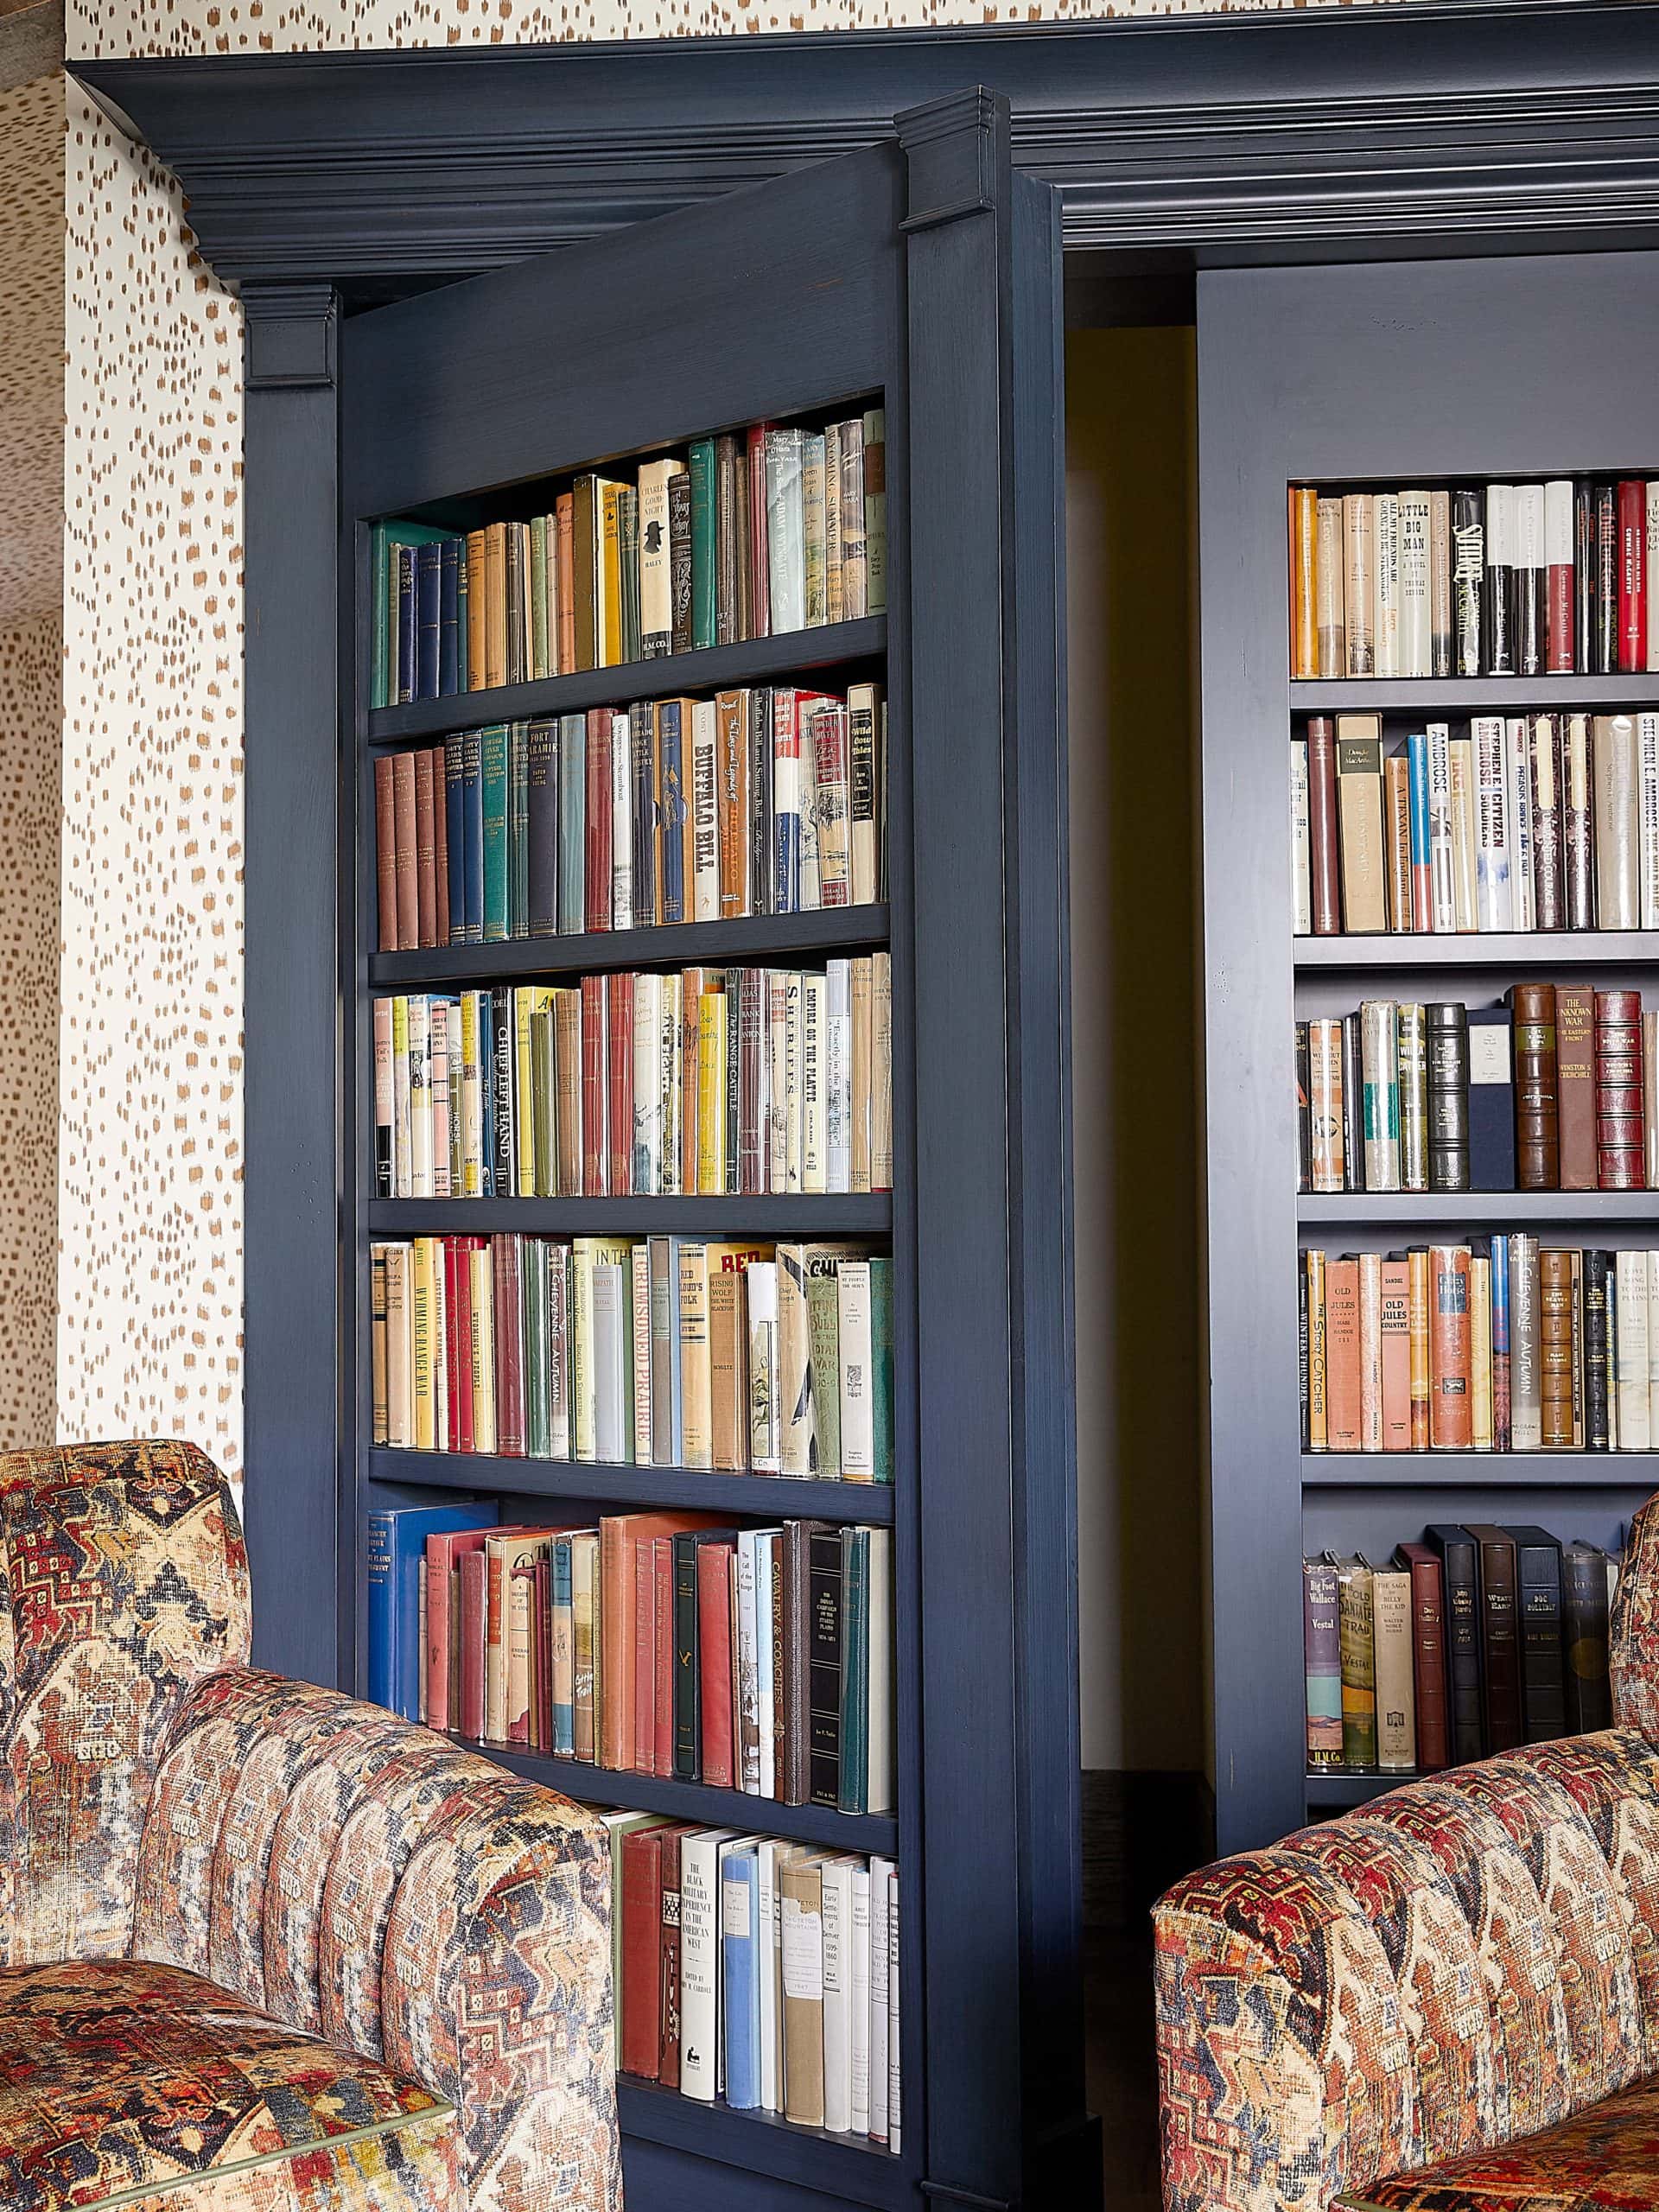 The study area with a hidden jib door on a bookshelf.